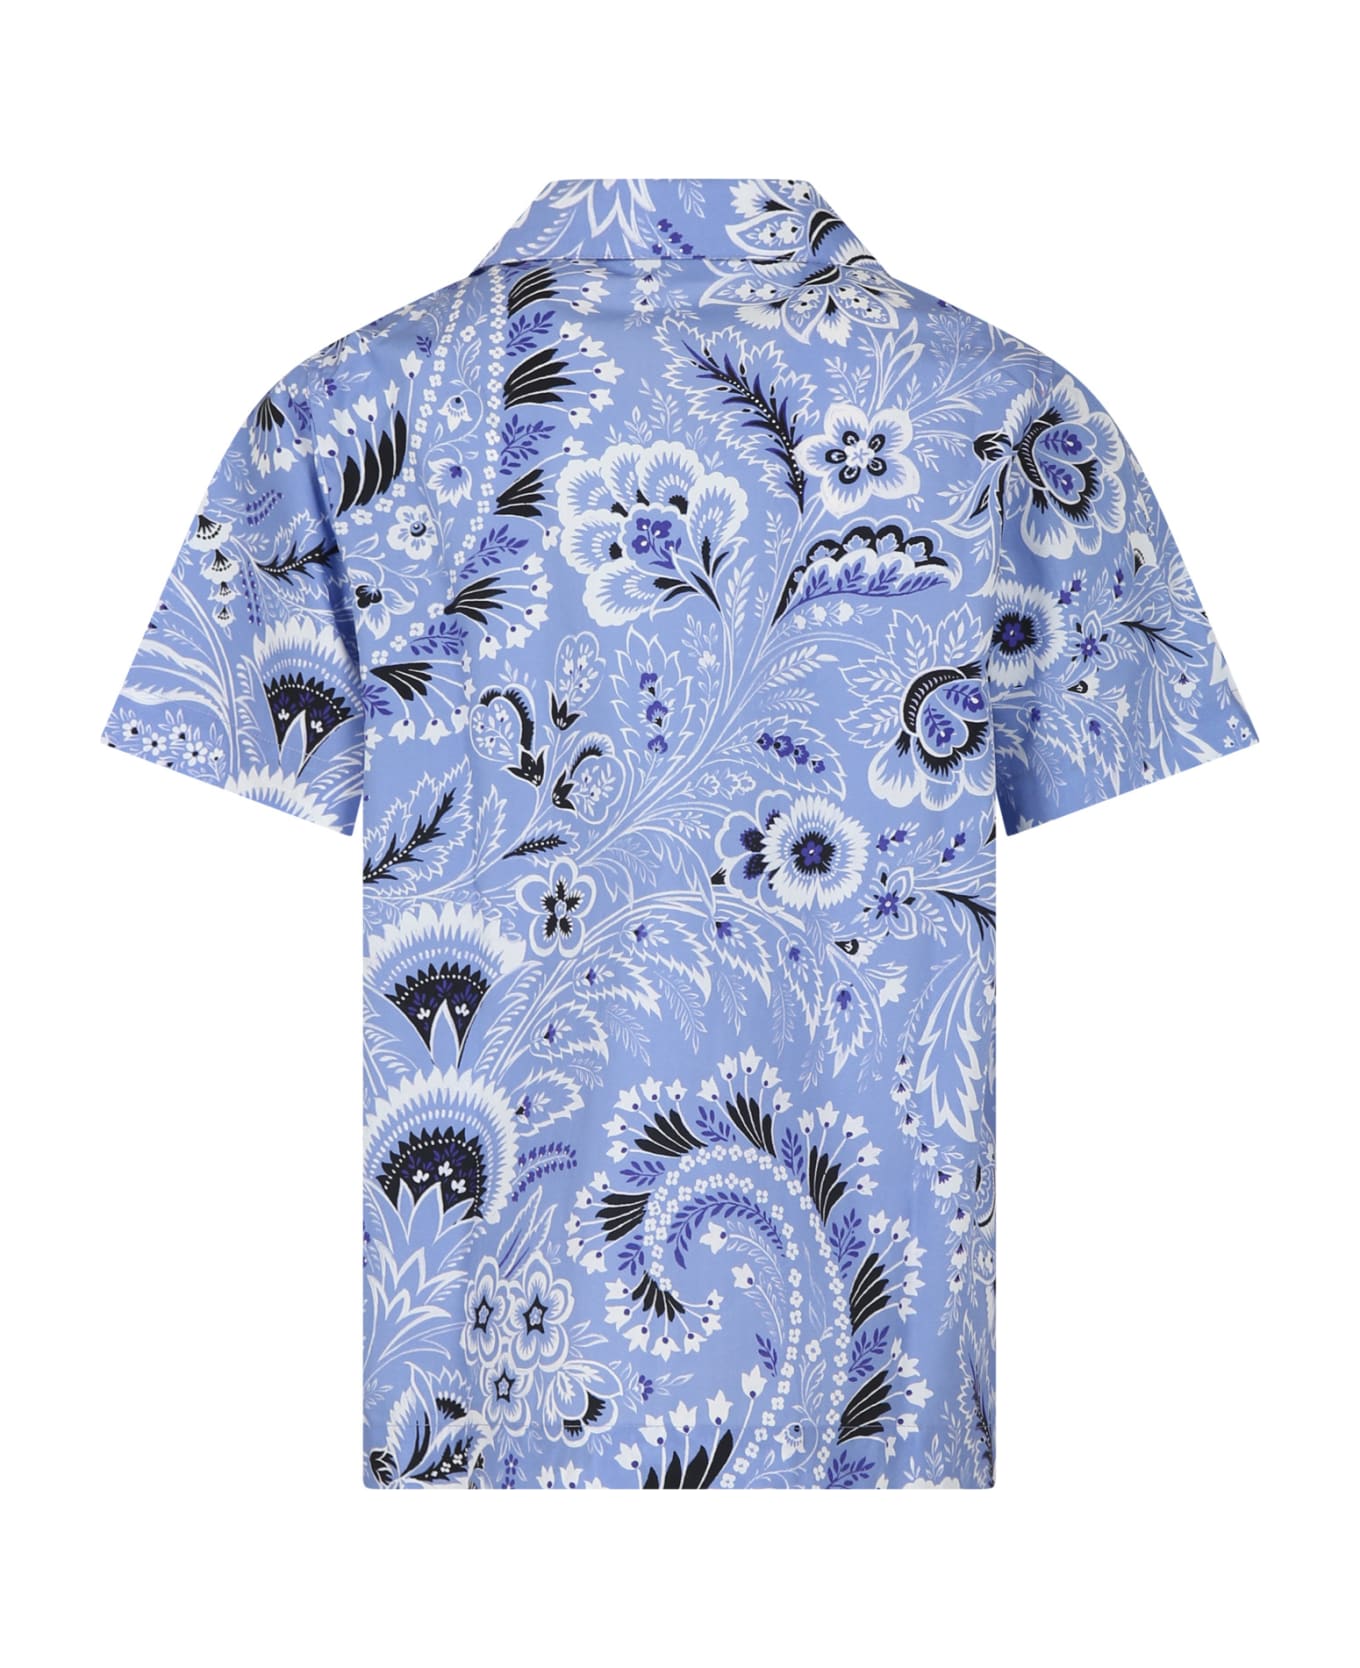 Etro Sky Blue Shirt For Boy With Paisley Pattern - Av